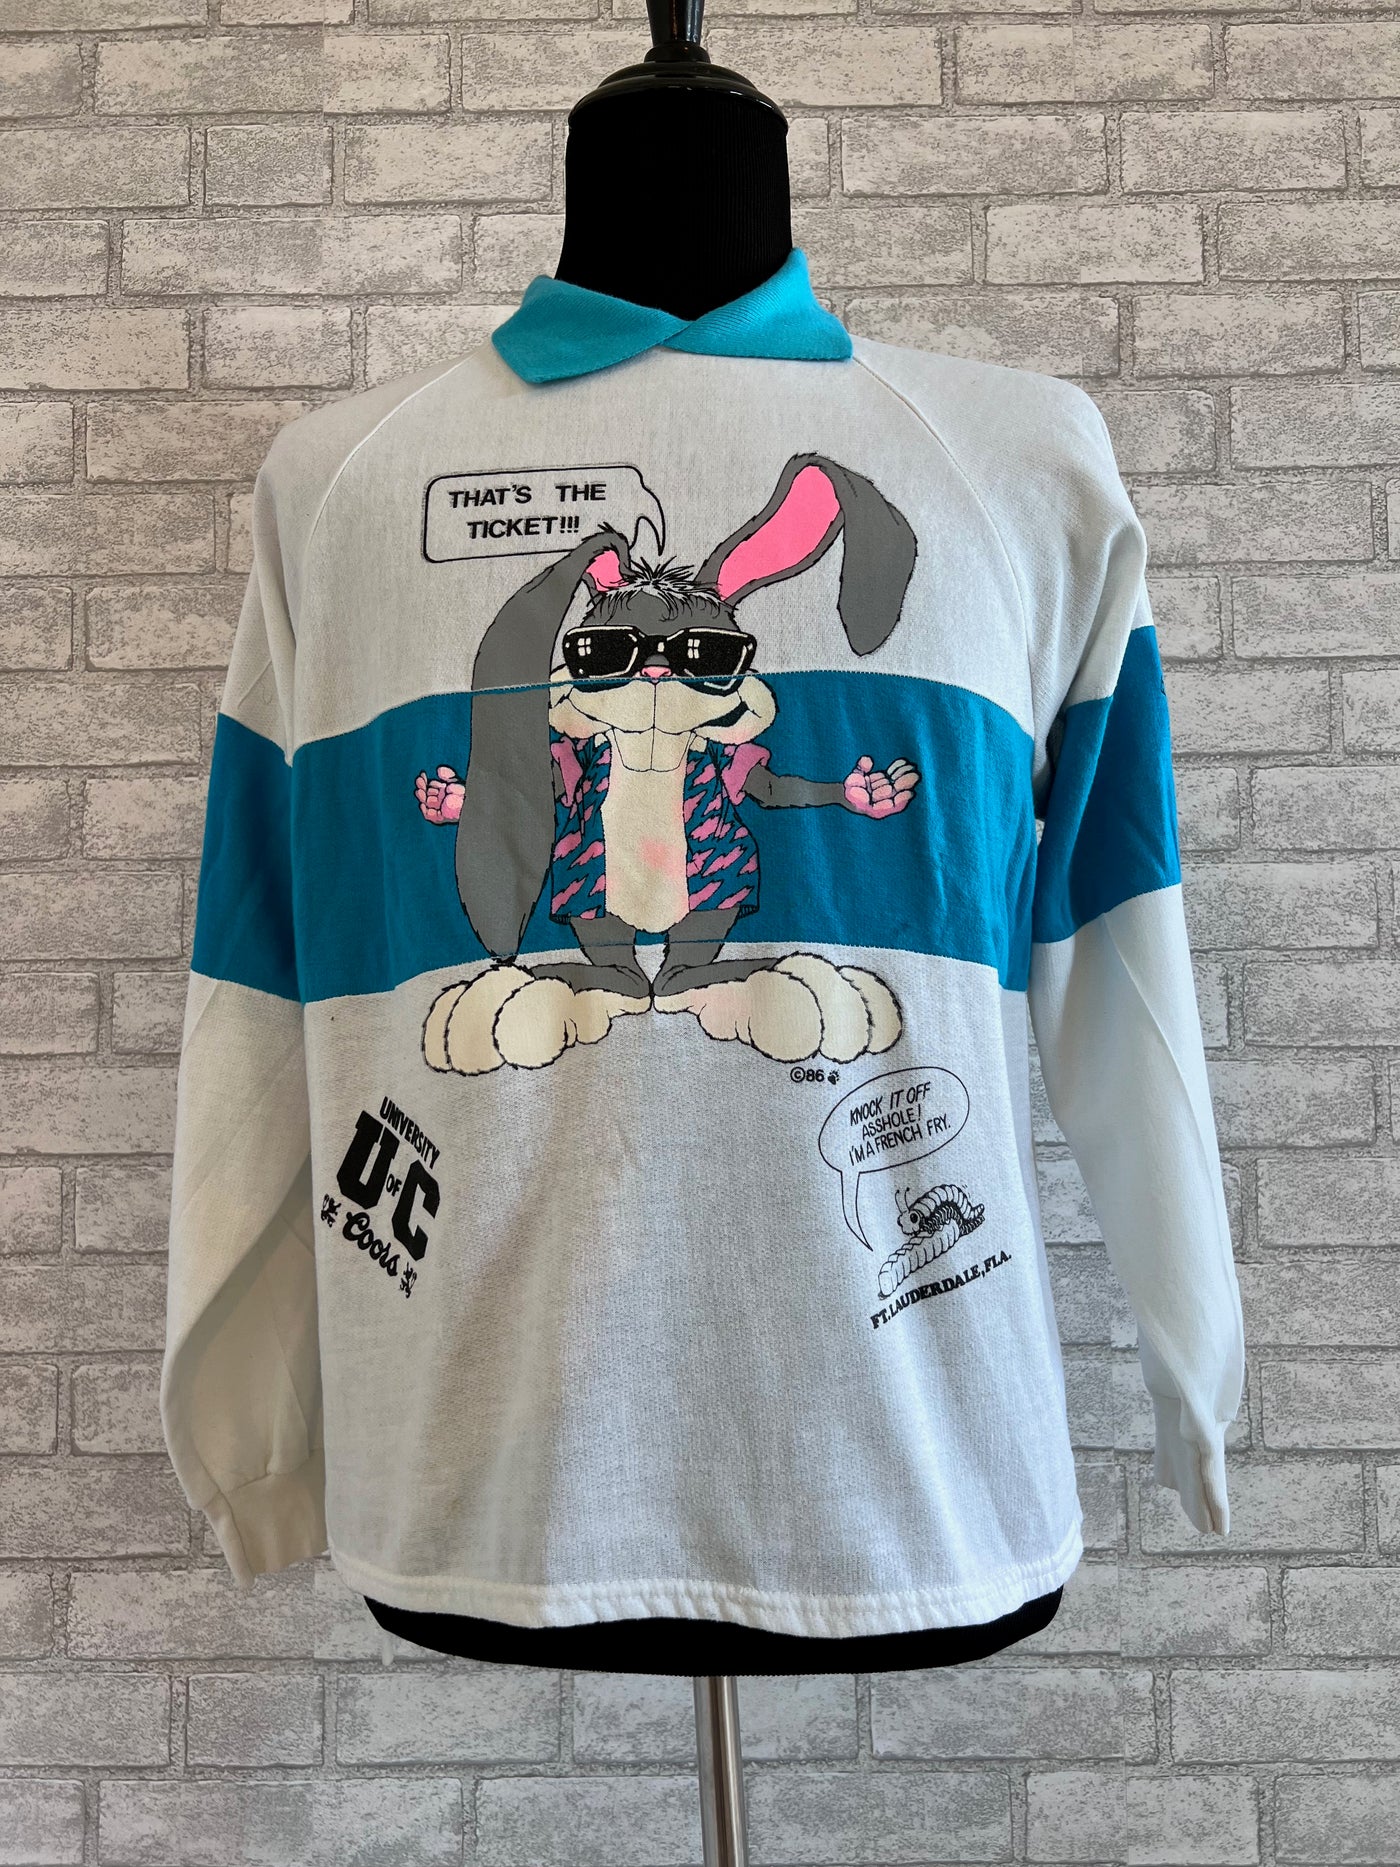 Vintage Sweatshirt Spring Break 1987 Fort Lauderdale.  White with Blue accent colors.